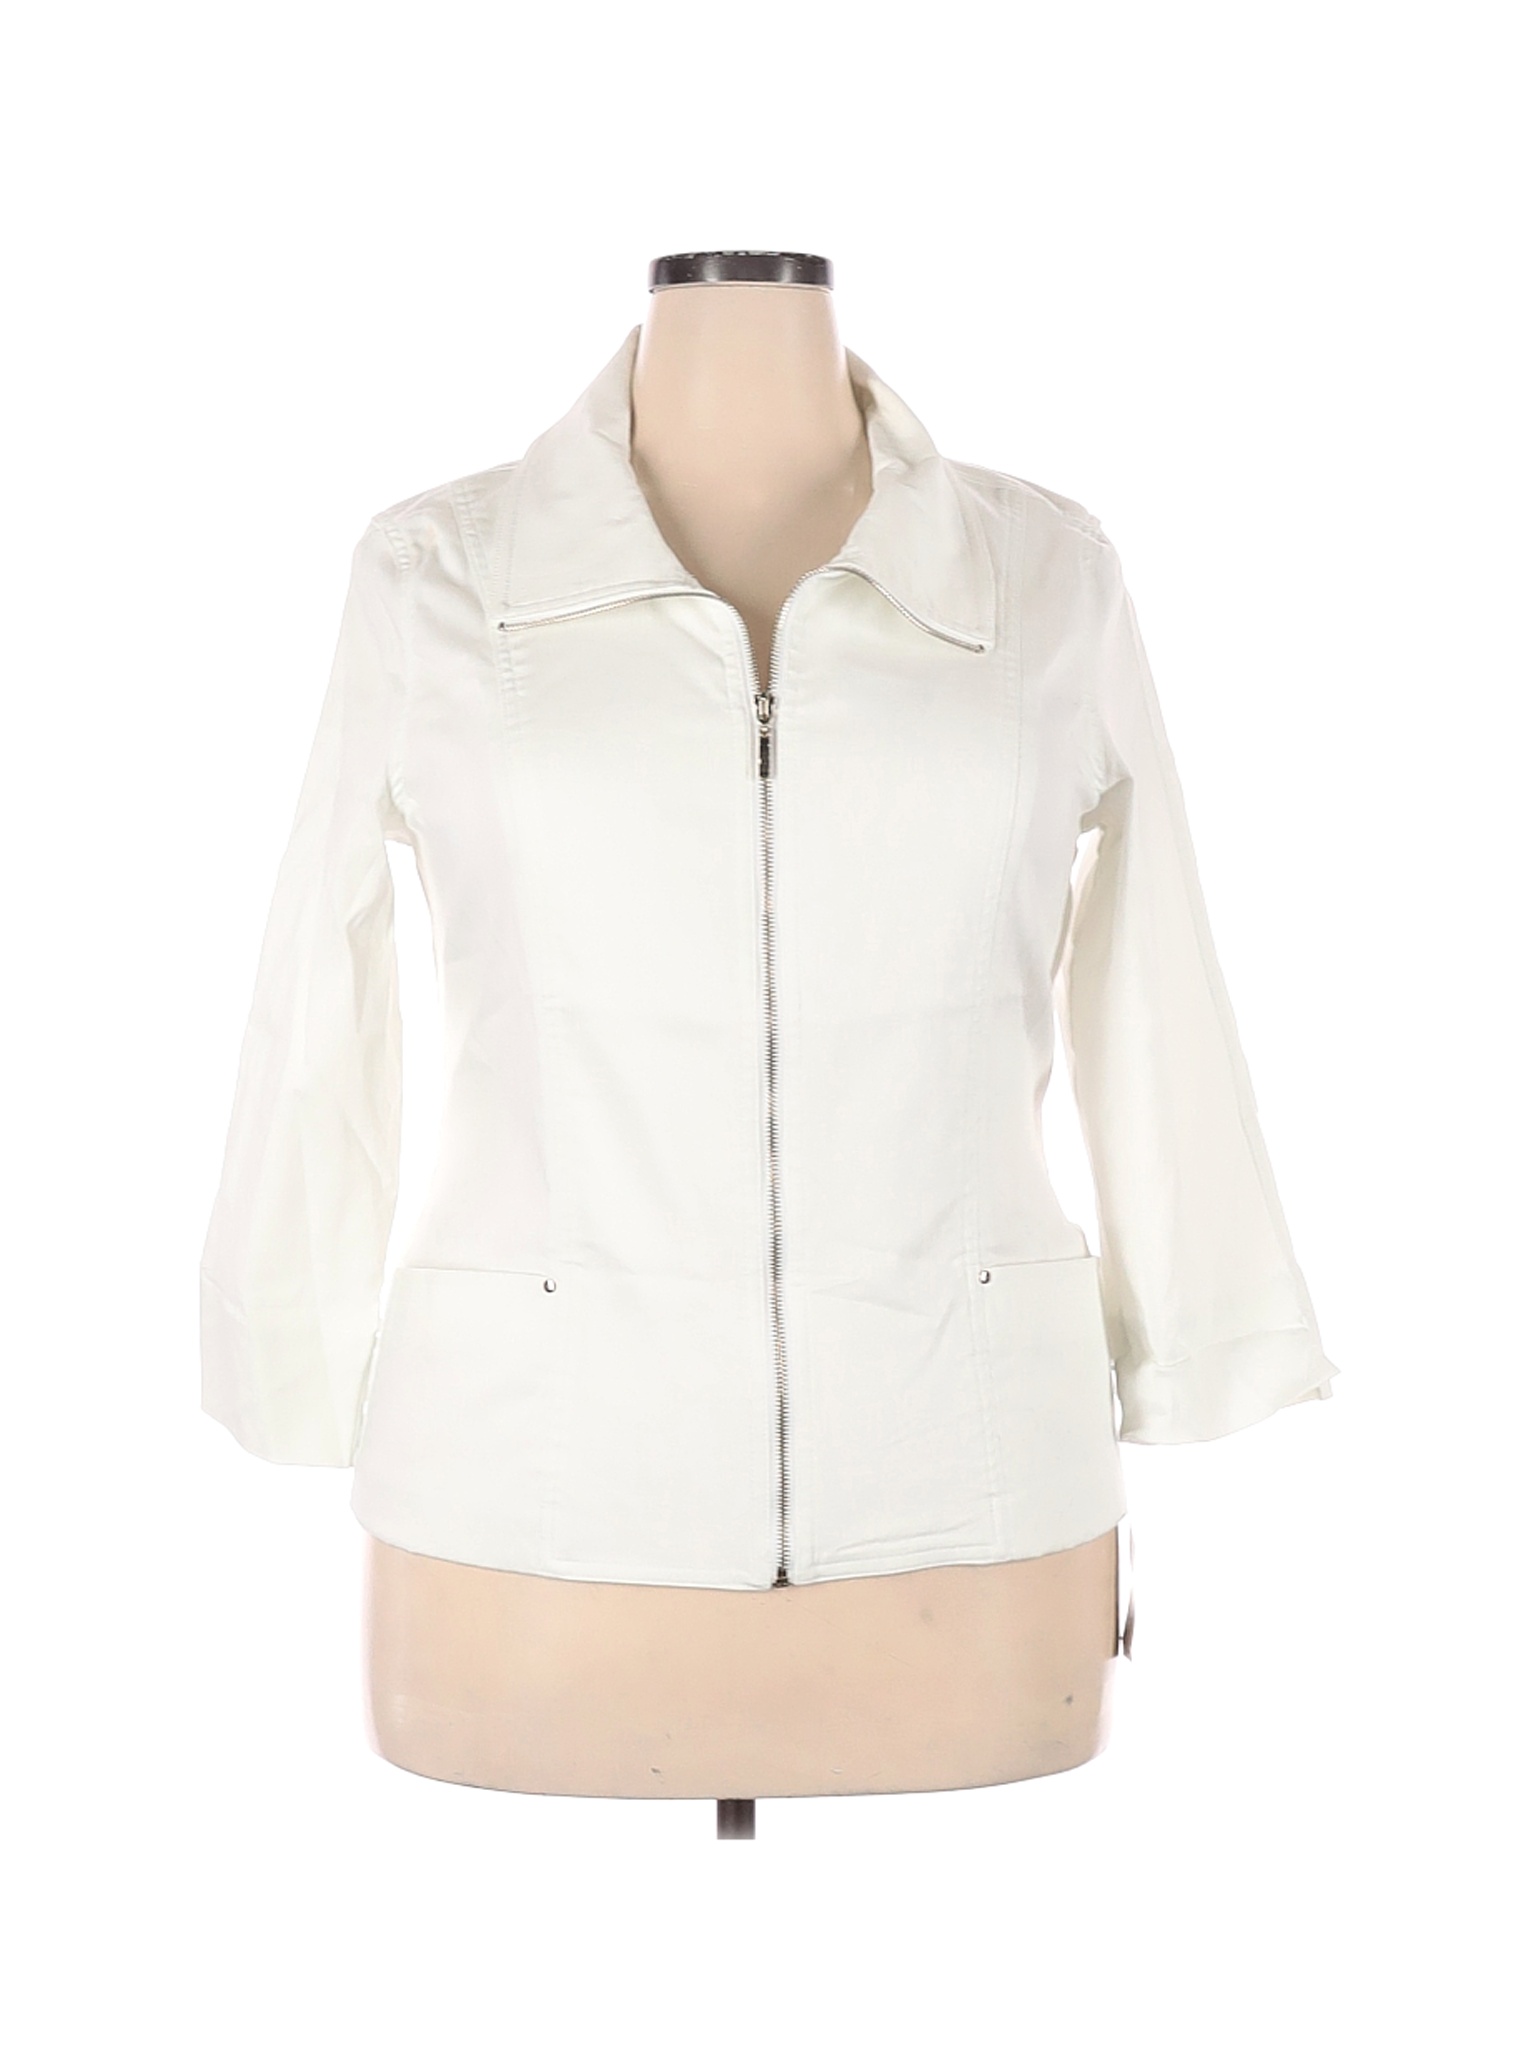 NWT JM Collection Women White Jacket 14 | eBay